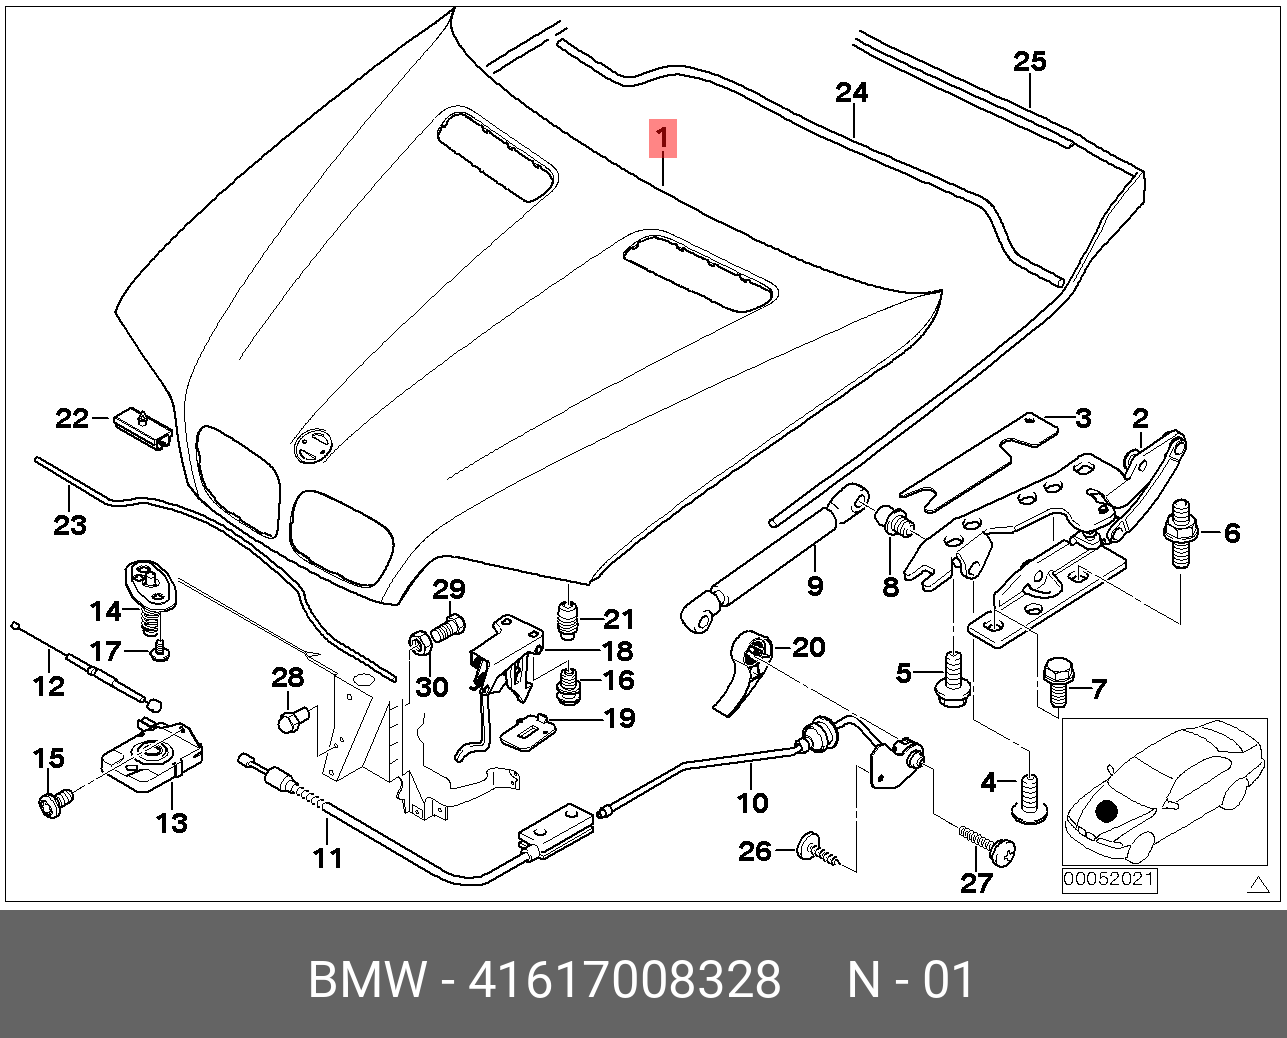 Капот x5. 51238402615 Трос привода капота BMW x5 53. Тросик капота БМВ х5 е53. Замок капота БМВ х5 е53. BMW x5 e53 капот.